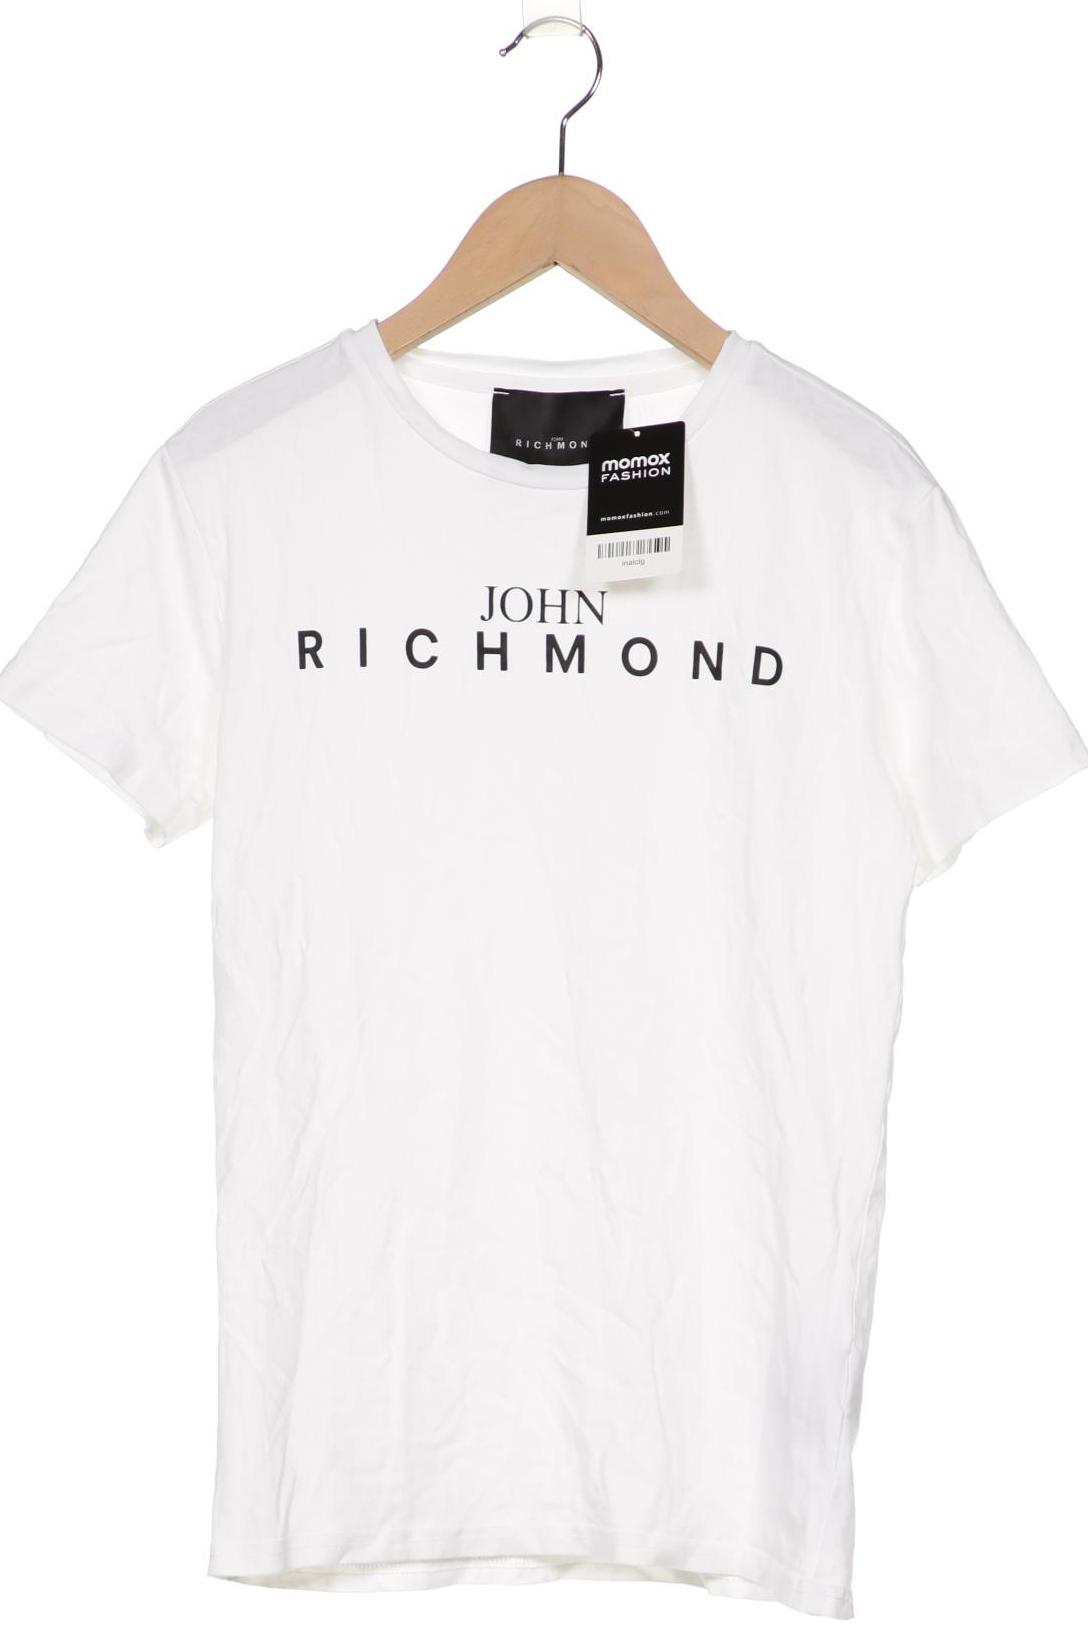 JOHN RICHMOND Damen T-Shirt, weiß von John Richmond